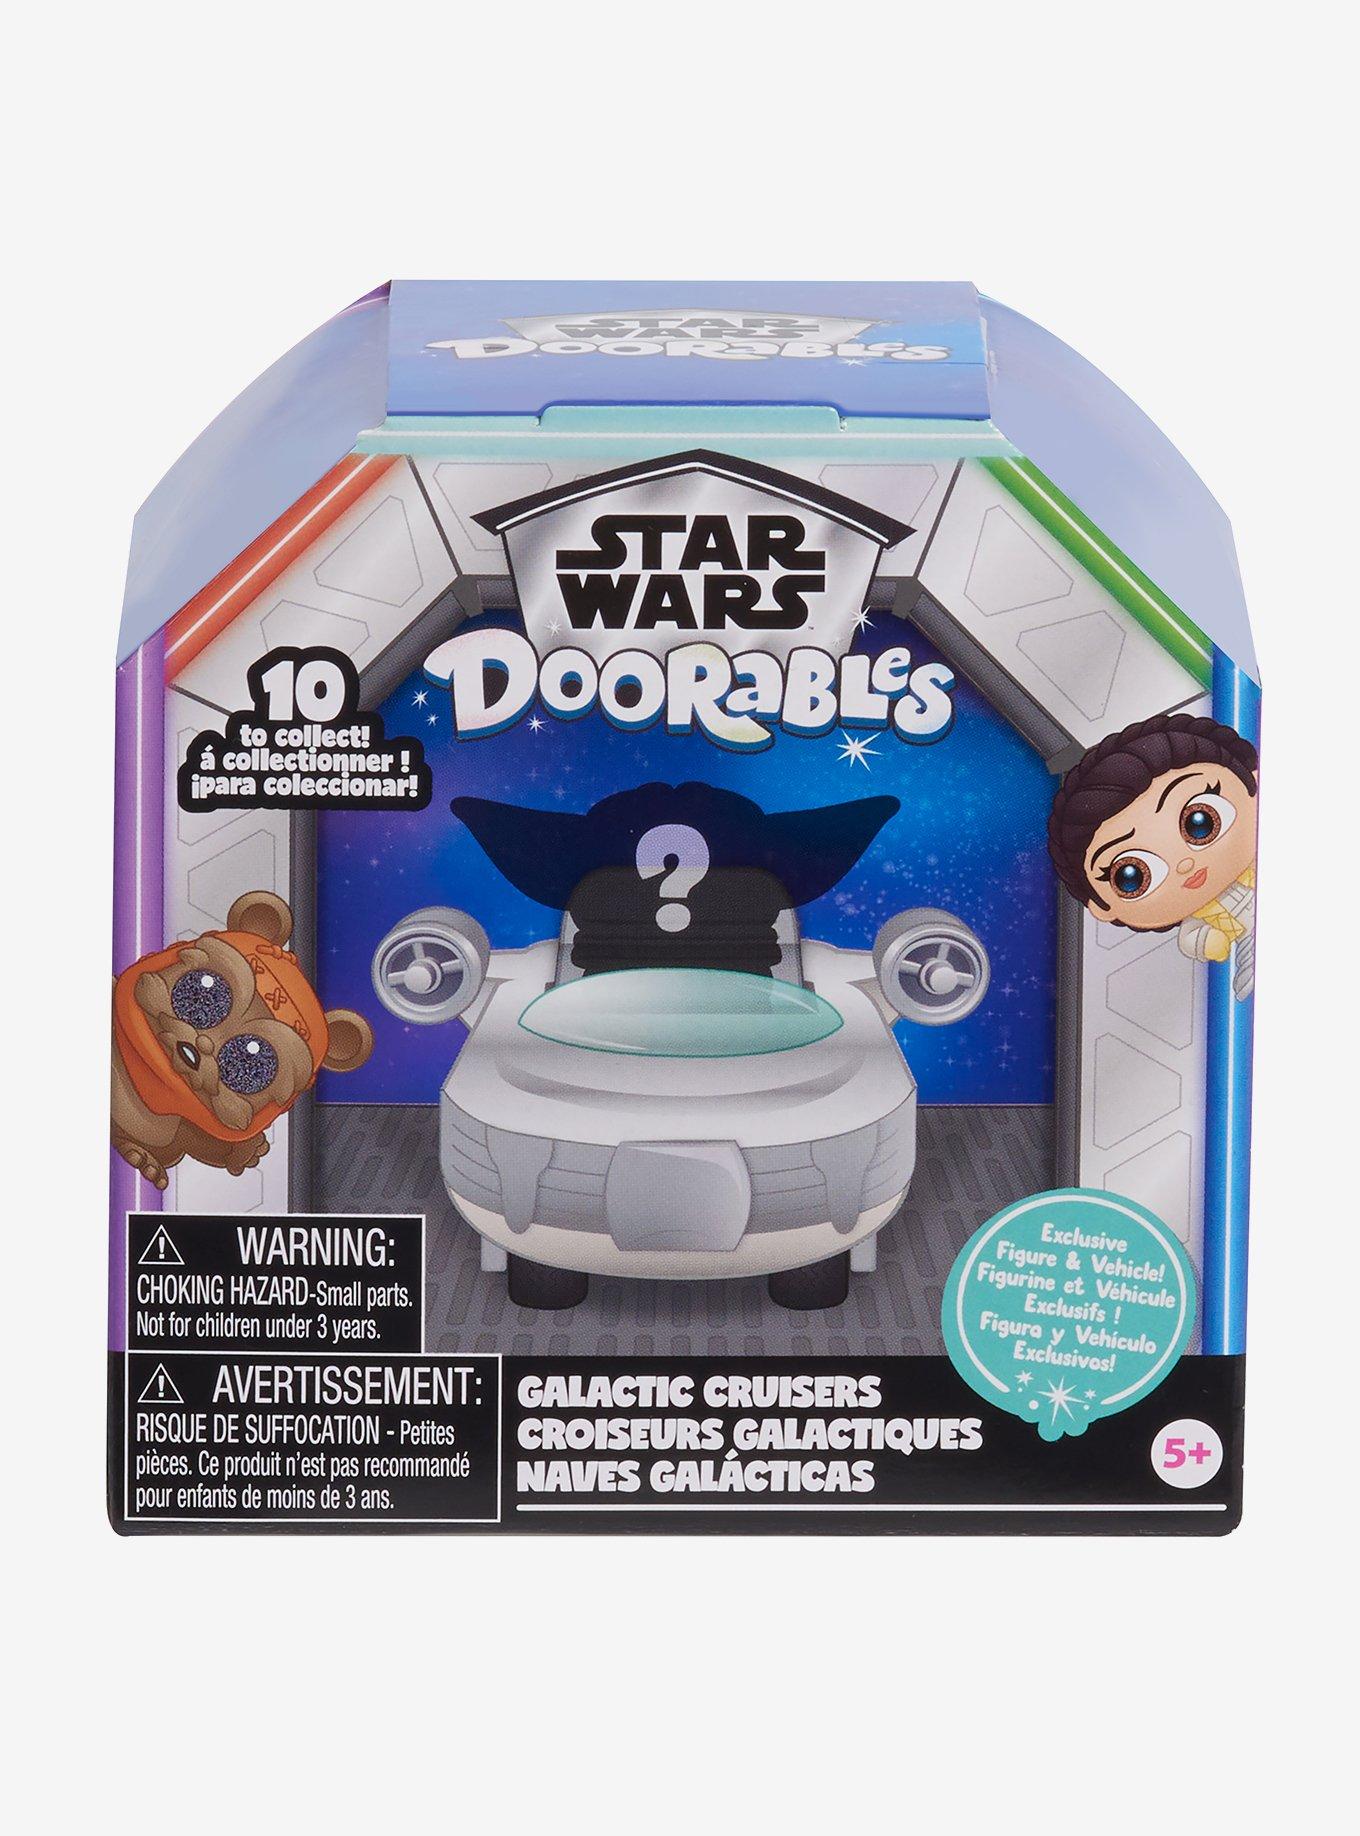 Star Wars Doorables Galactic Cruisers Blind Box Figure